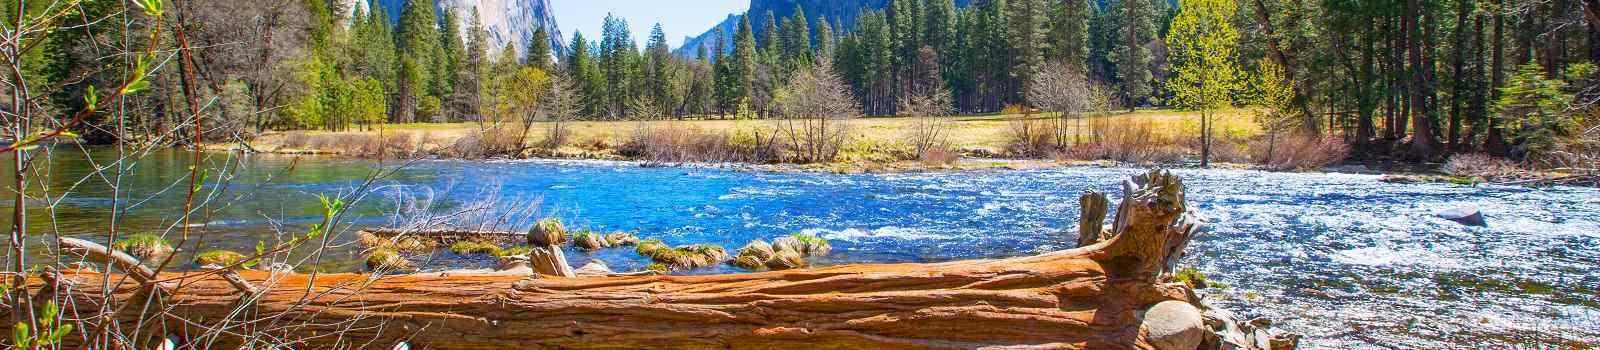 PANORAMA-SUD-WEST 1 Yosemite River el Capitan and Half Dome 163476170